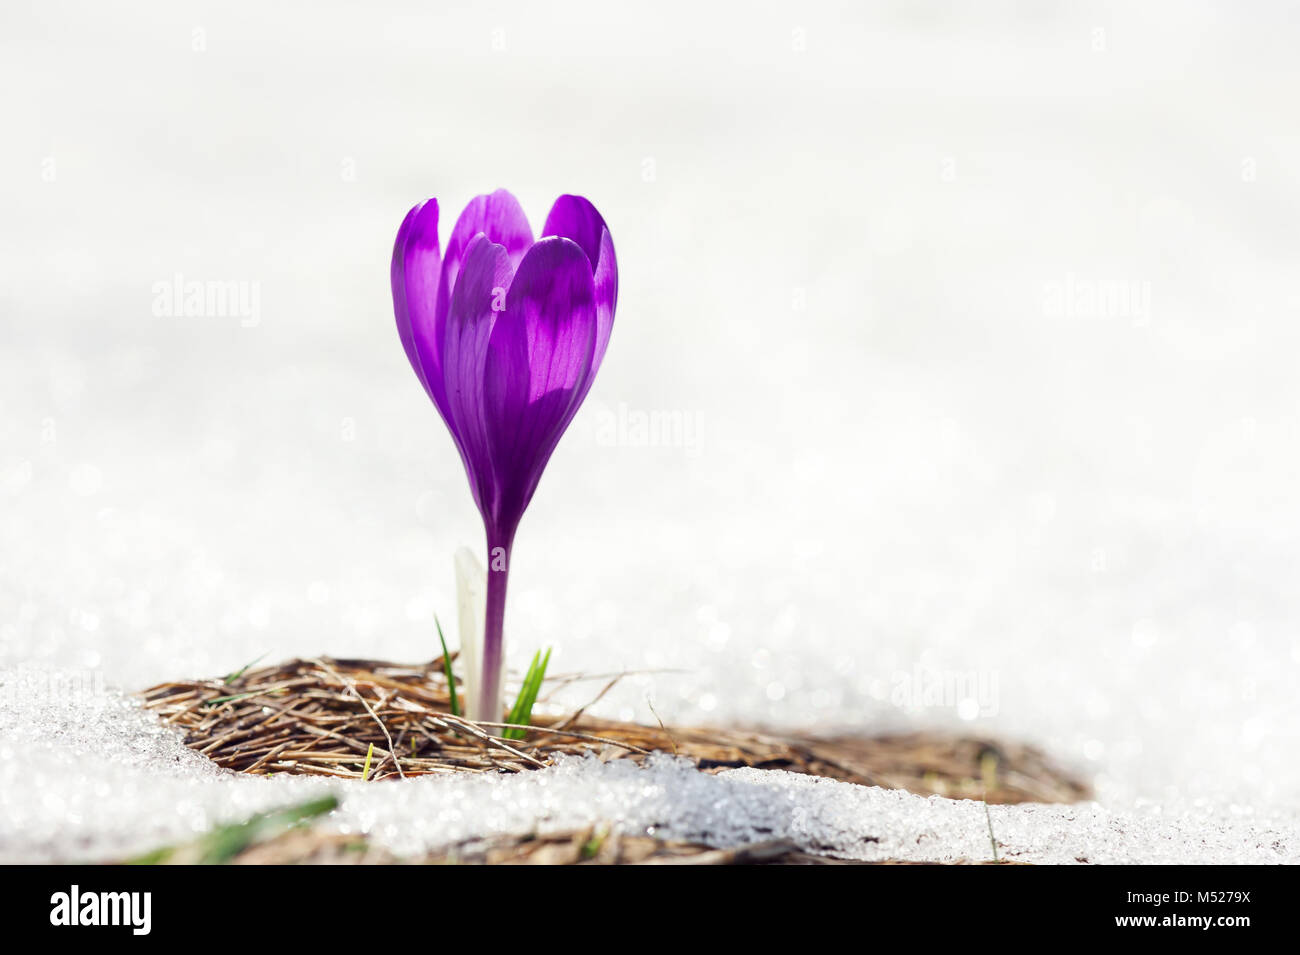 Alone crocus flower in snow Stock Photo